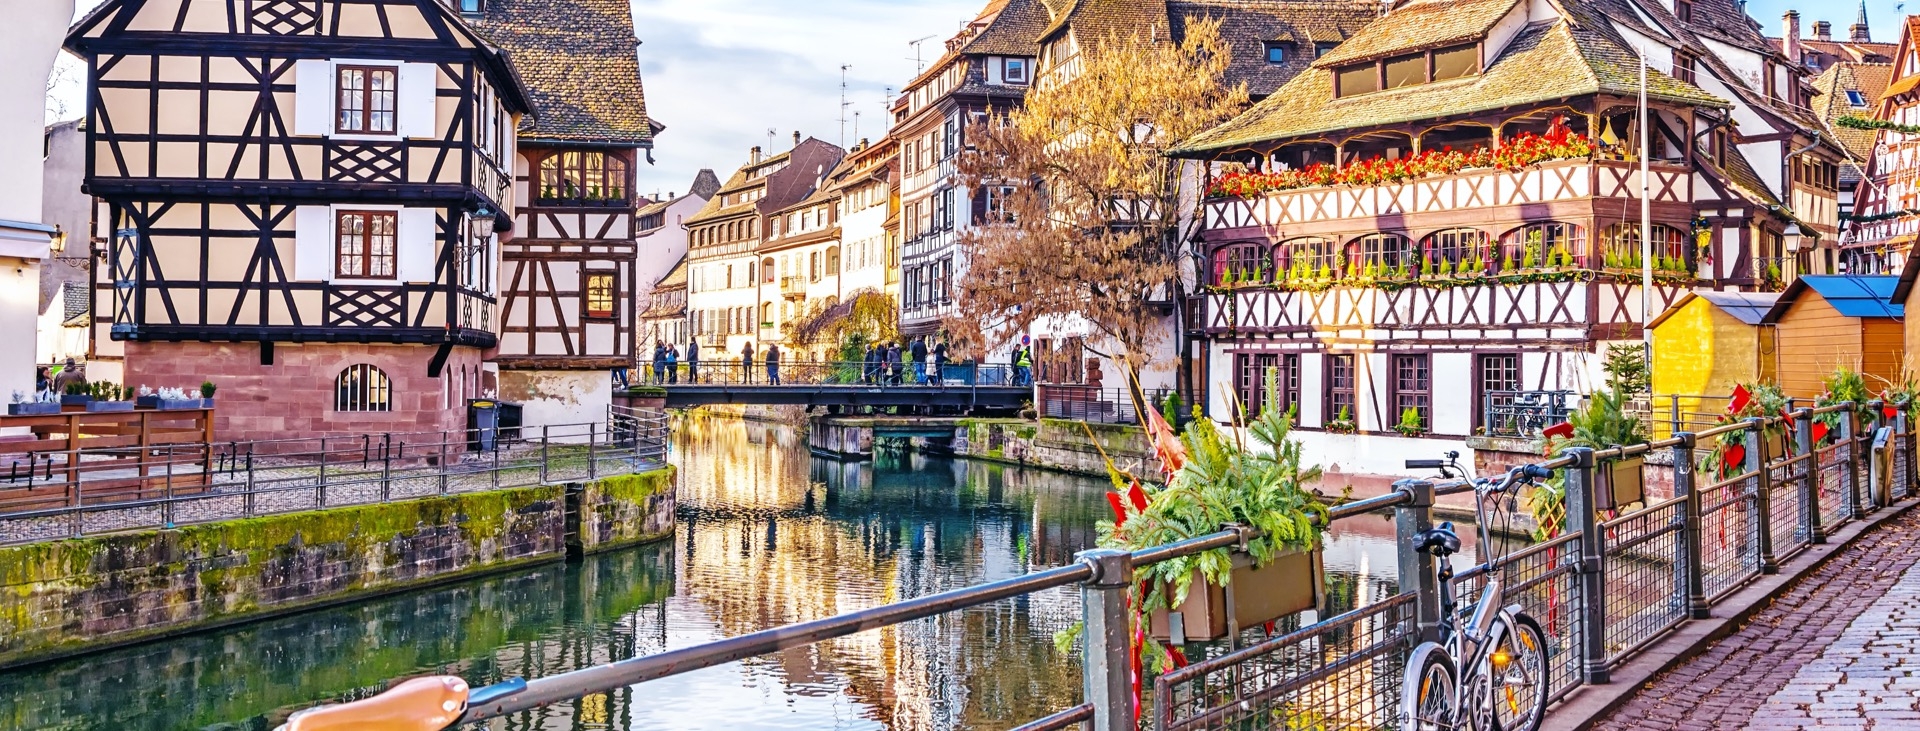 Masal Gibi Alsace & Lorainne Vadisi ( Colmar & Strasbourg)